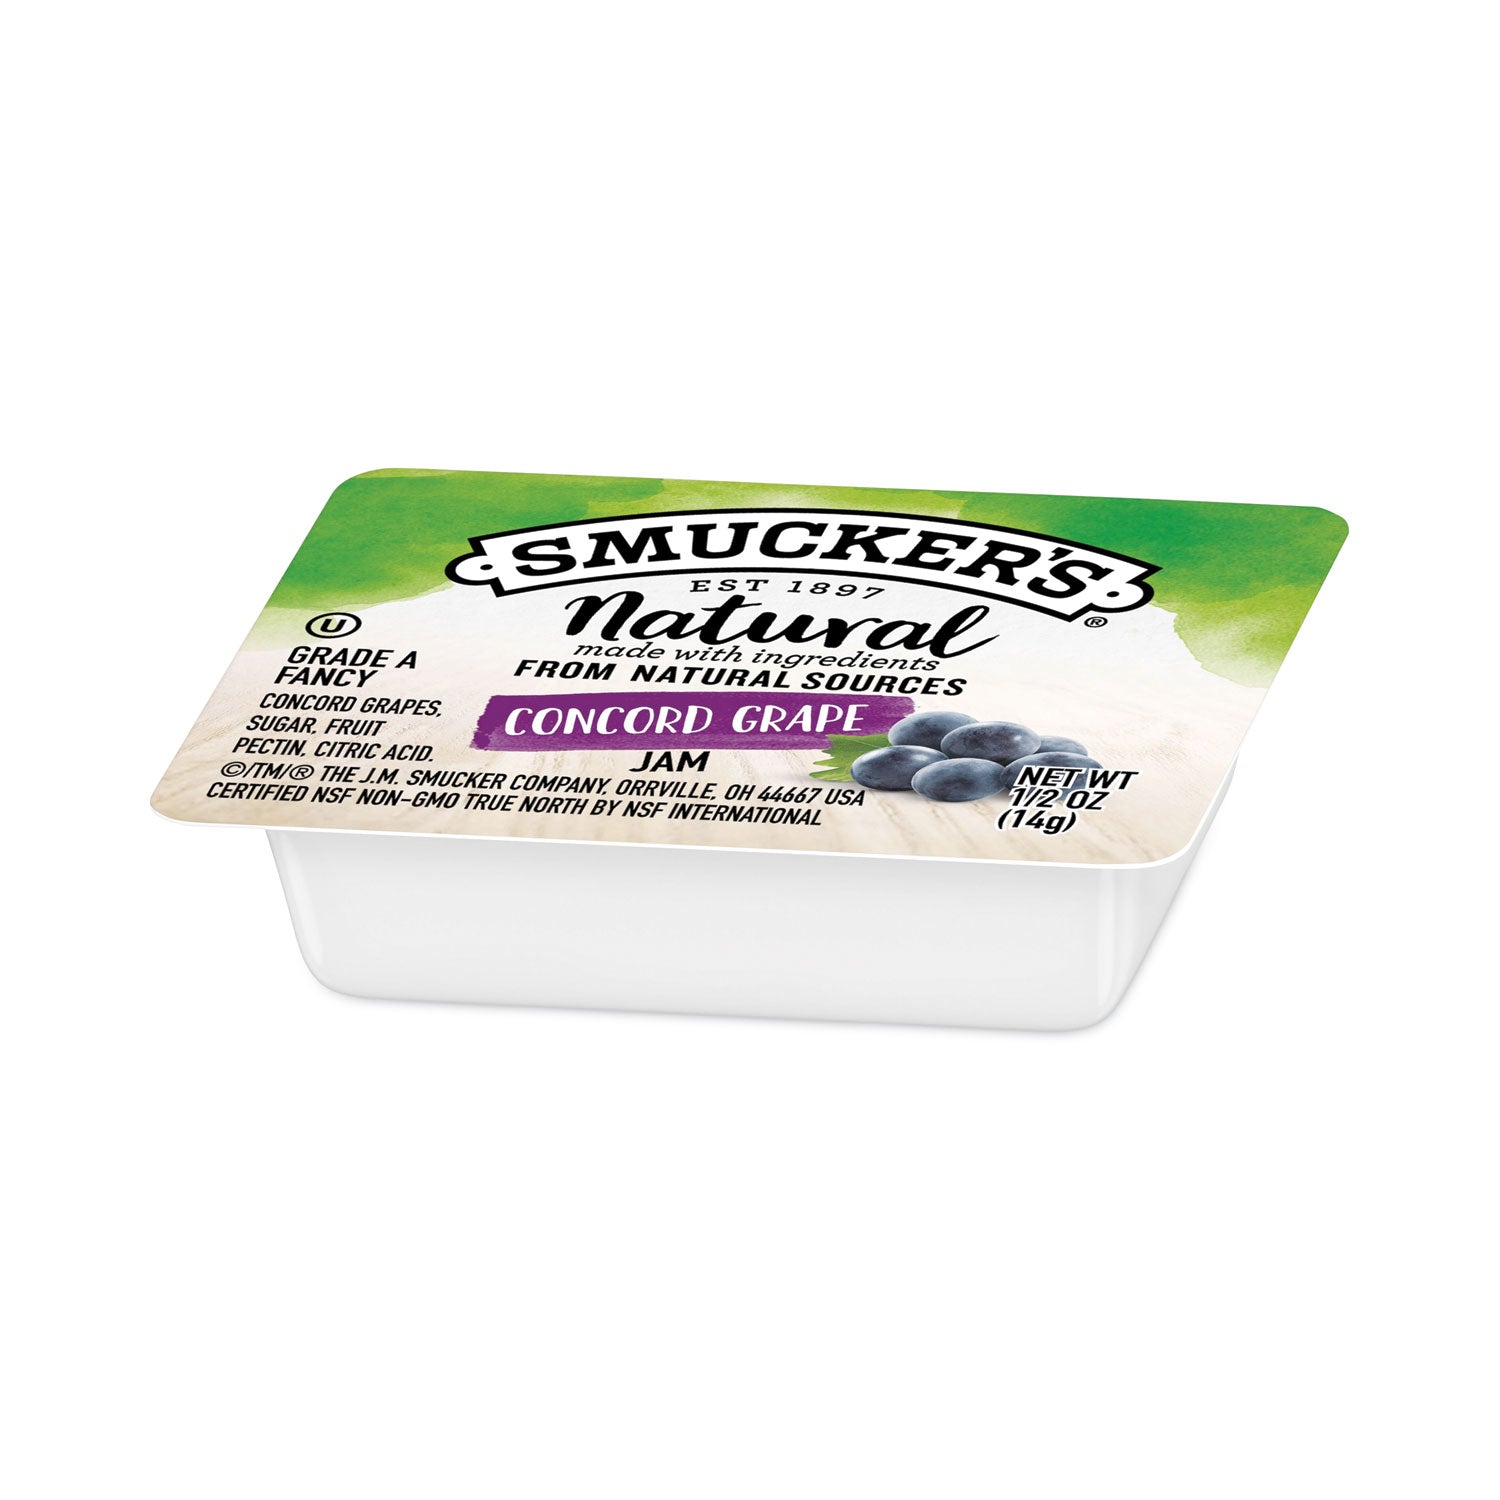 smuckers-1-2-ounce-natural-jam-05-oz-container-concord-grape-200-carton_smu8202 - 2